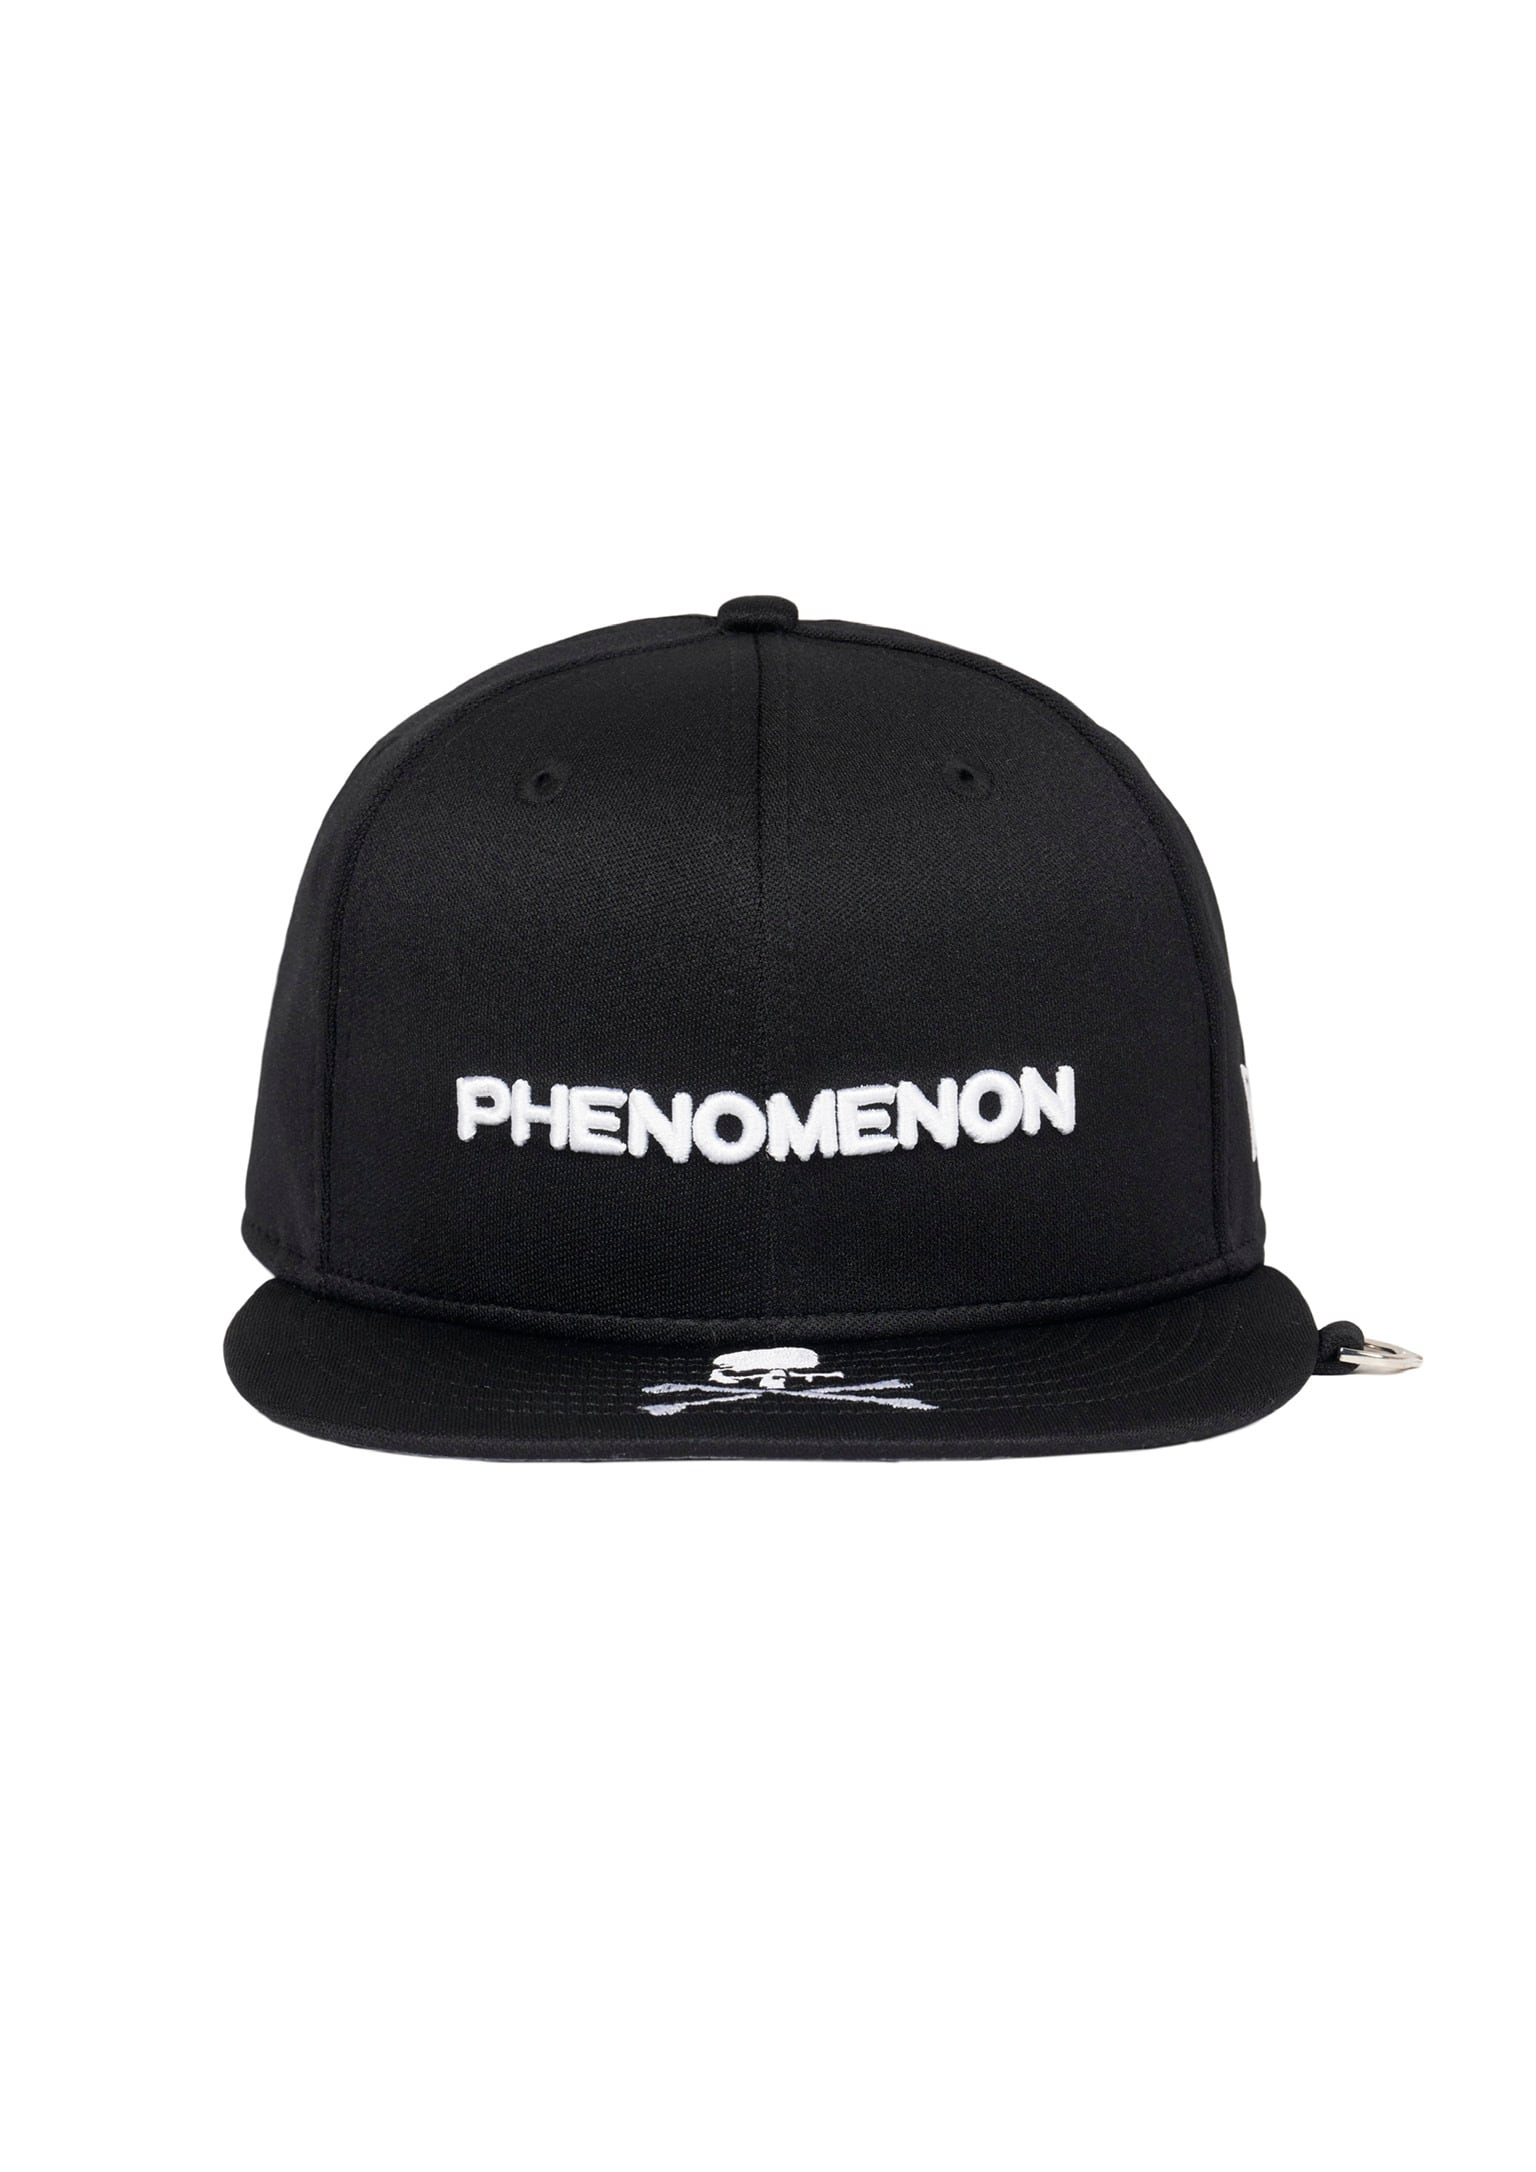 PHENOMENON×MASTERMIND WORLD×NEW ERA CAP